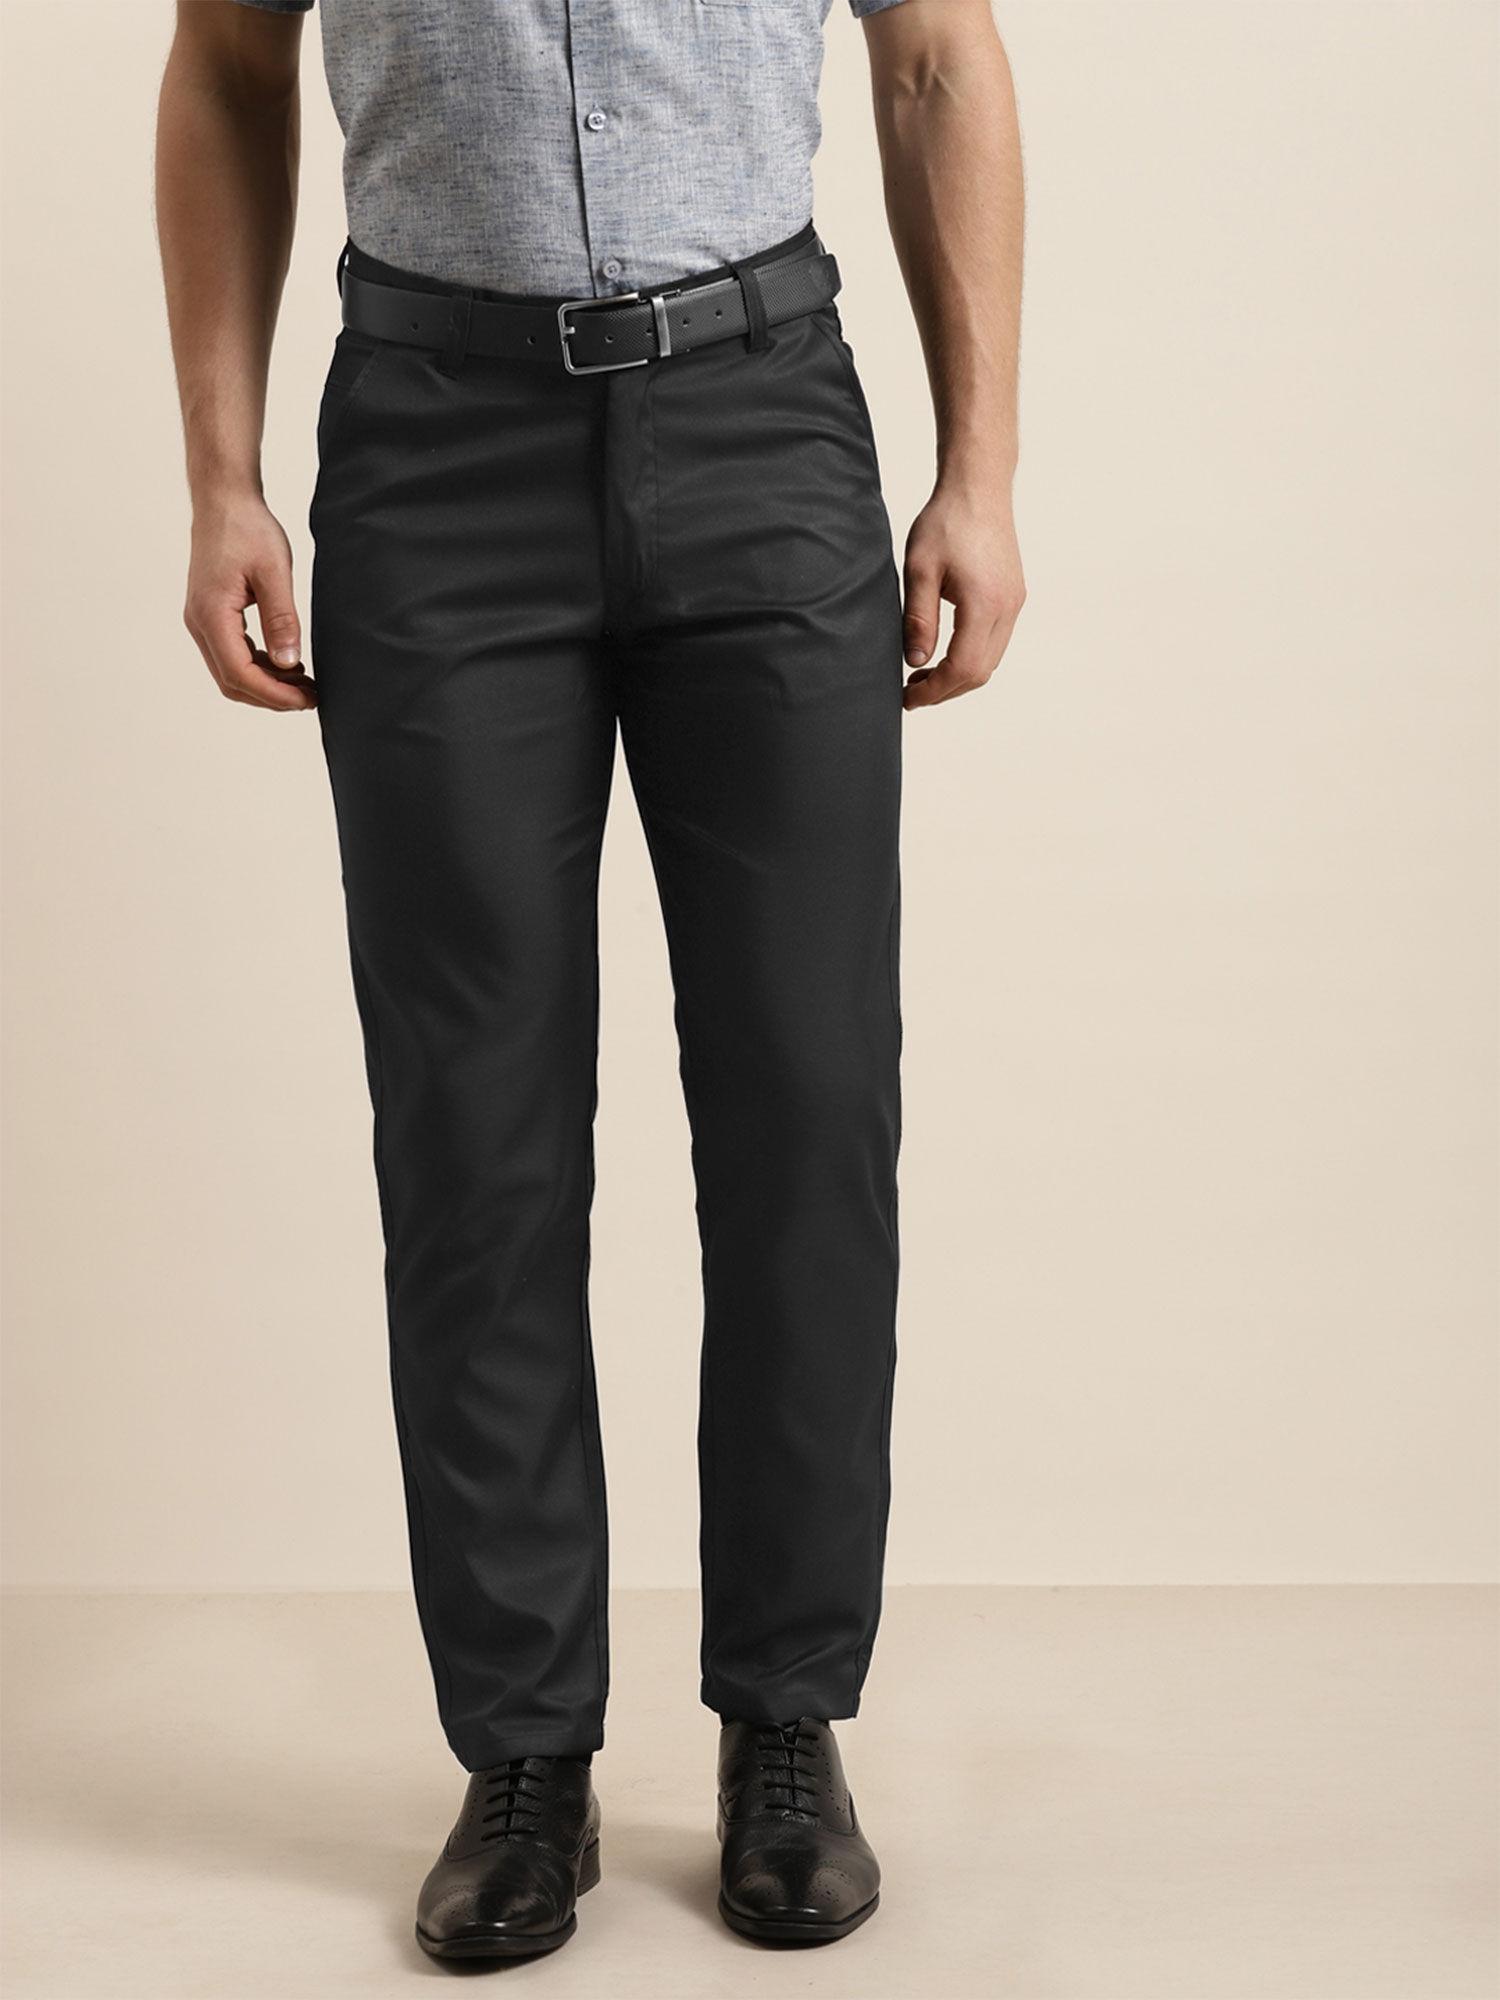 cotton blend black solid casual trouser